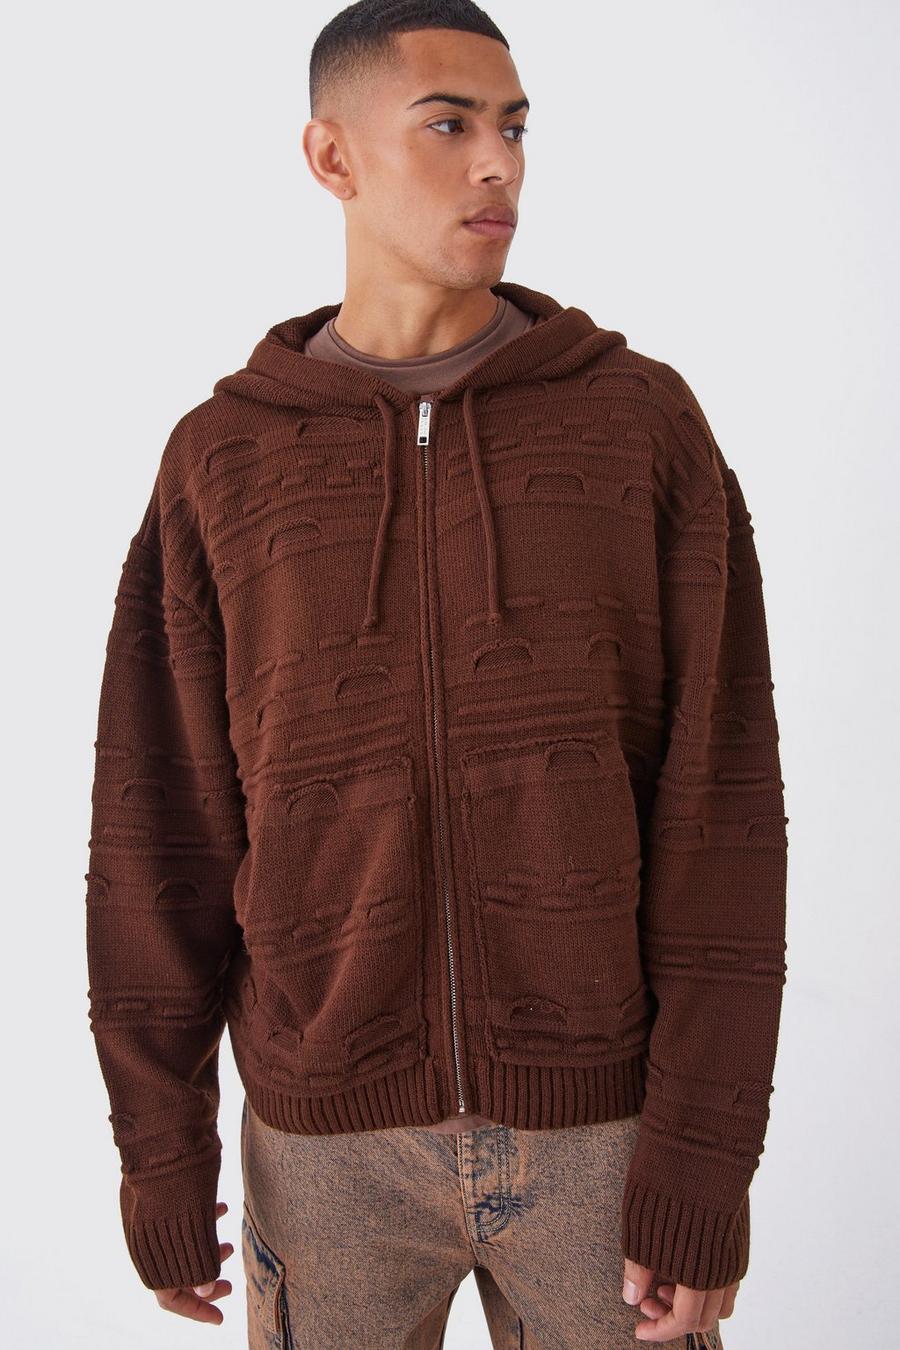 Chocolate brown Oversized 3d Jacqaurd Knitted Zip Through Hoodie